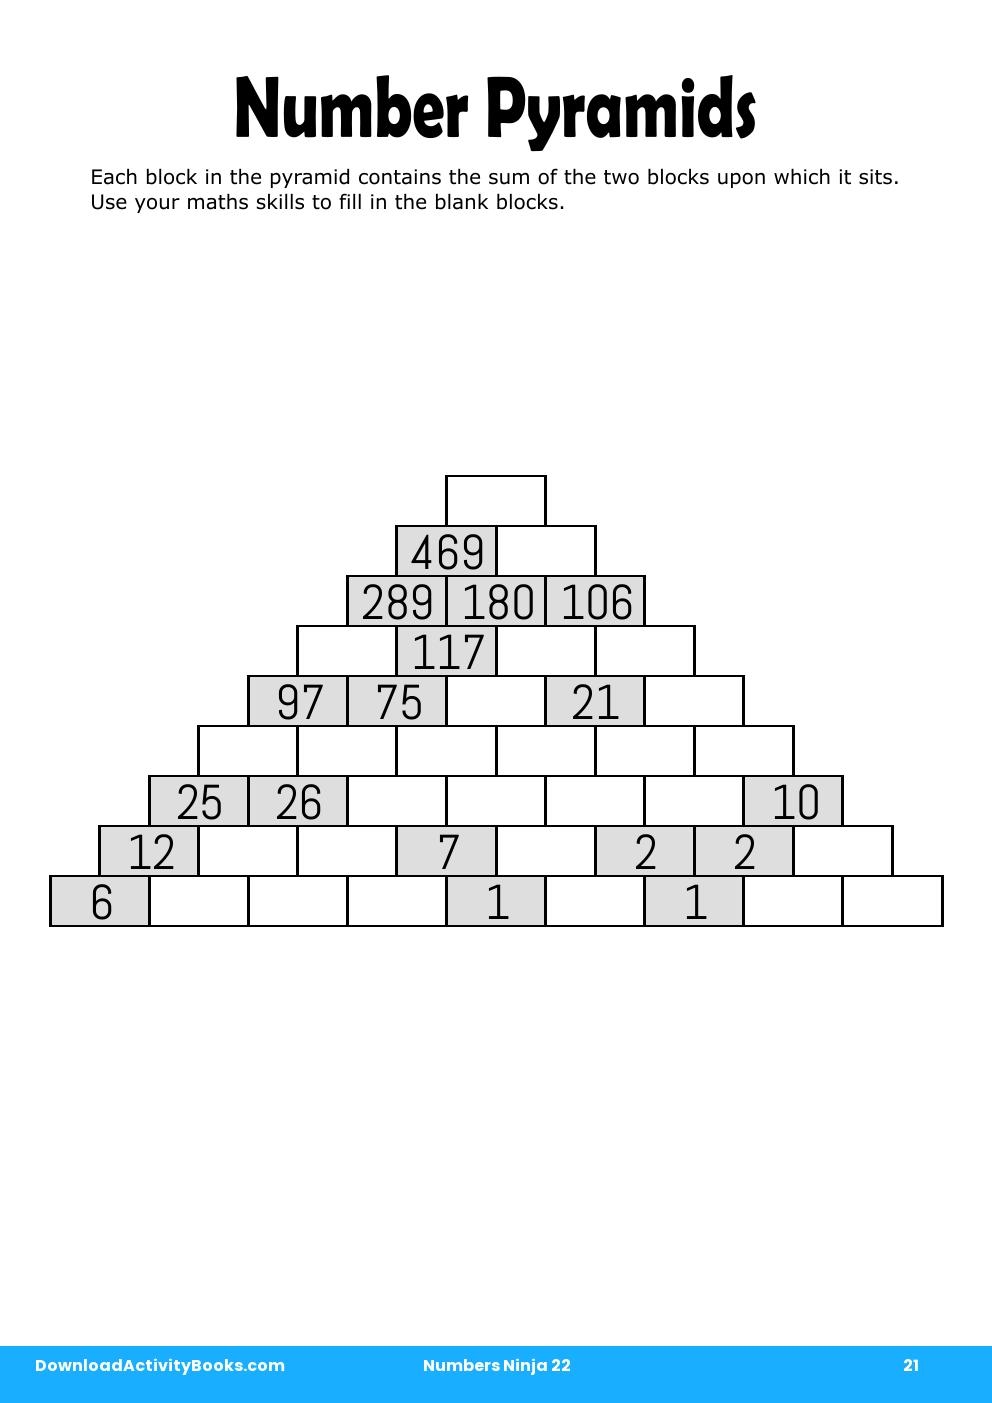 Number Pyramids in Numbers Ninja 22